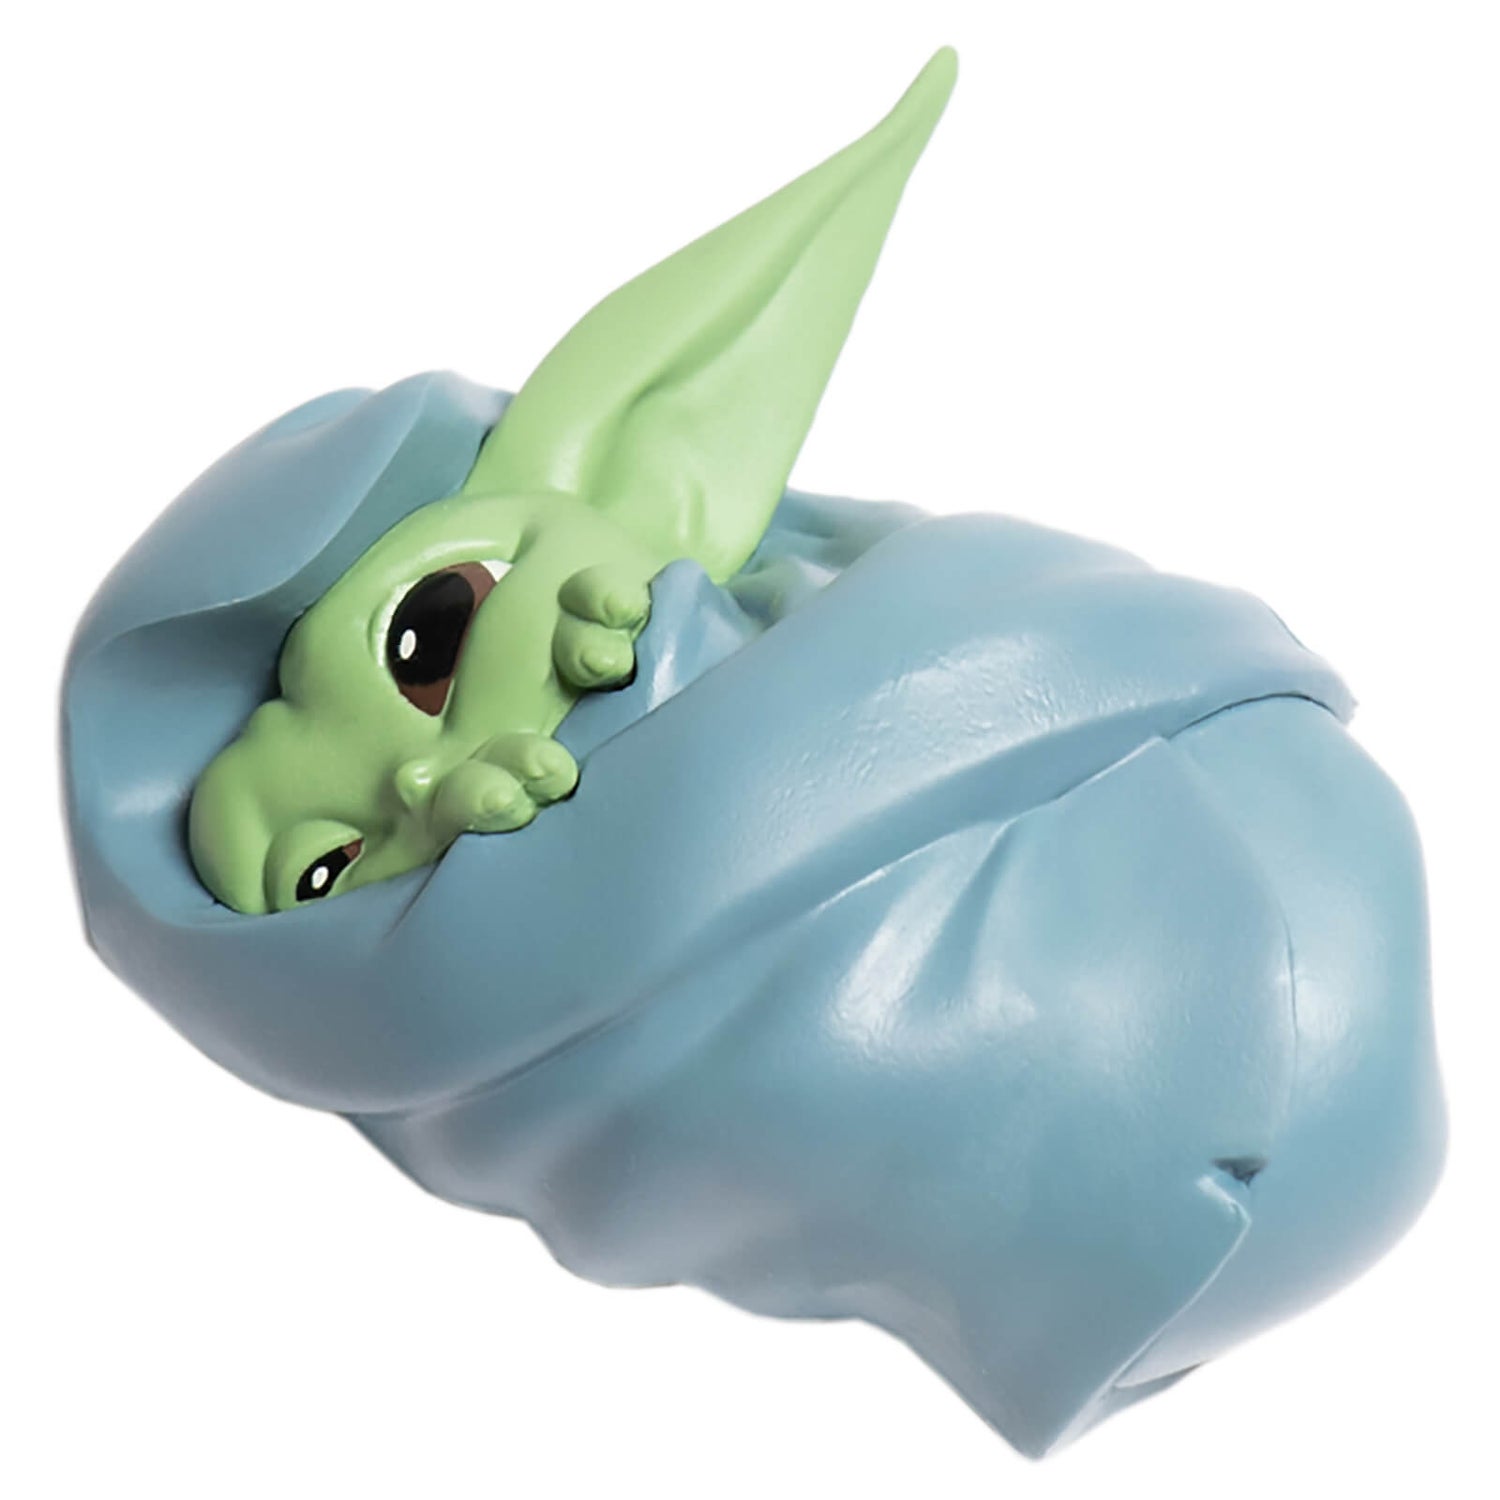 Hasbro Star Wars: The Mandalorian Baby Bounties "Wrapped in Blanket" Mini Figure